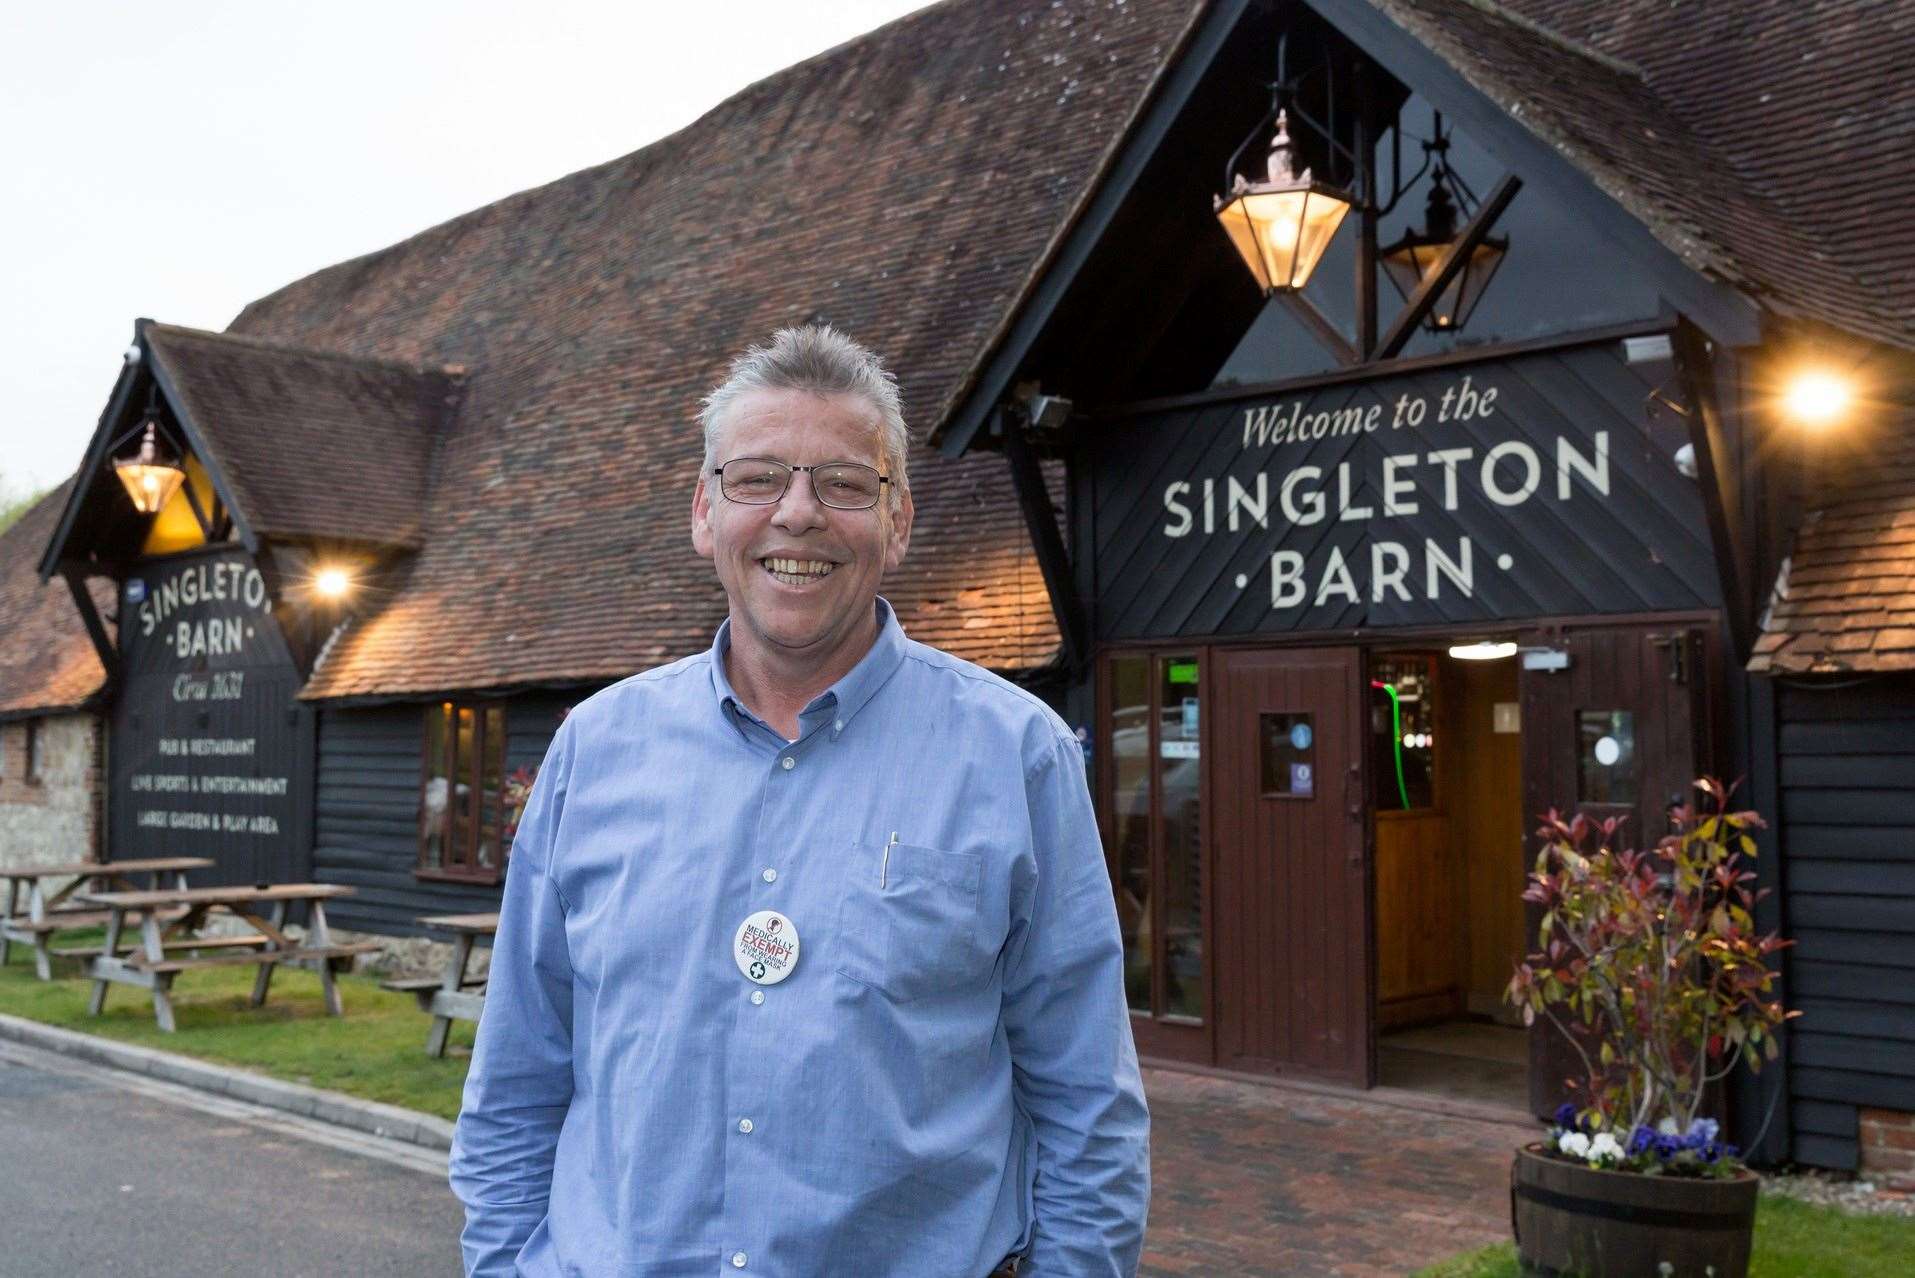 Mr Bispham started at Singleton Barn in 2010